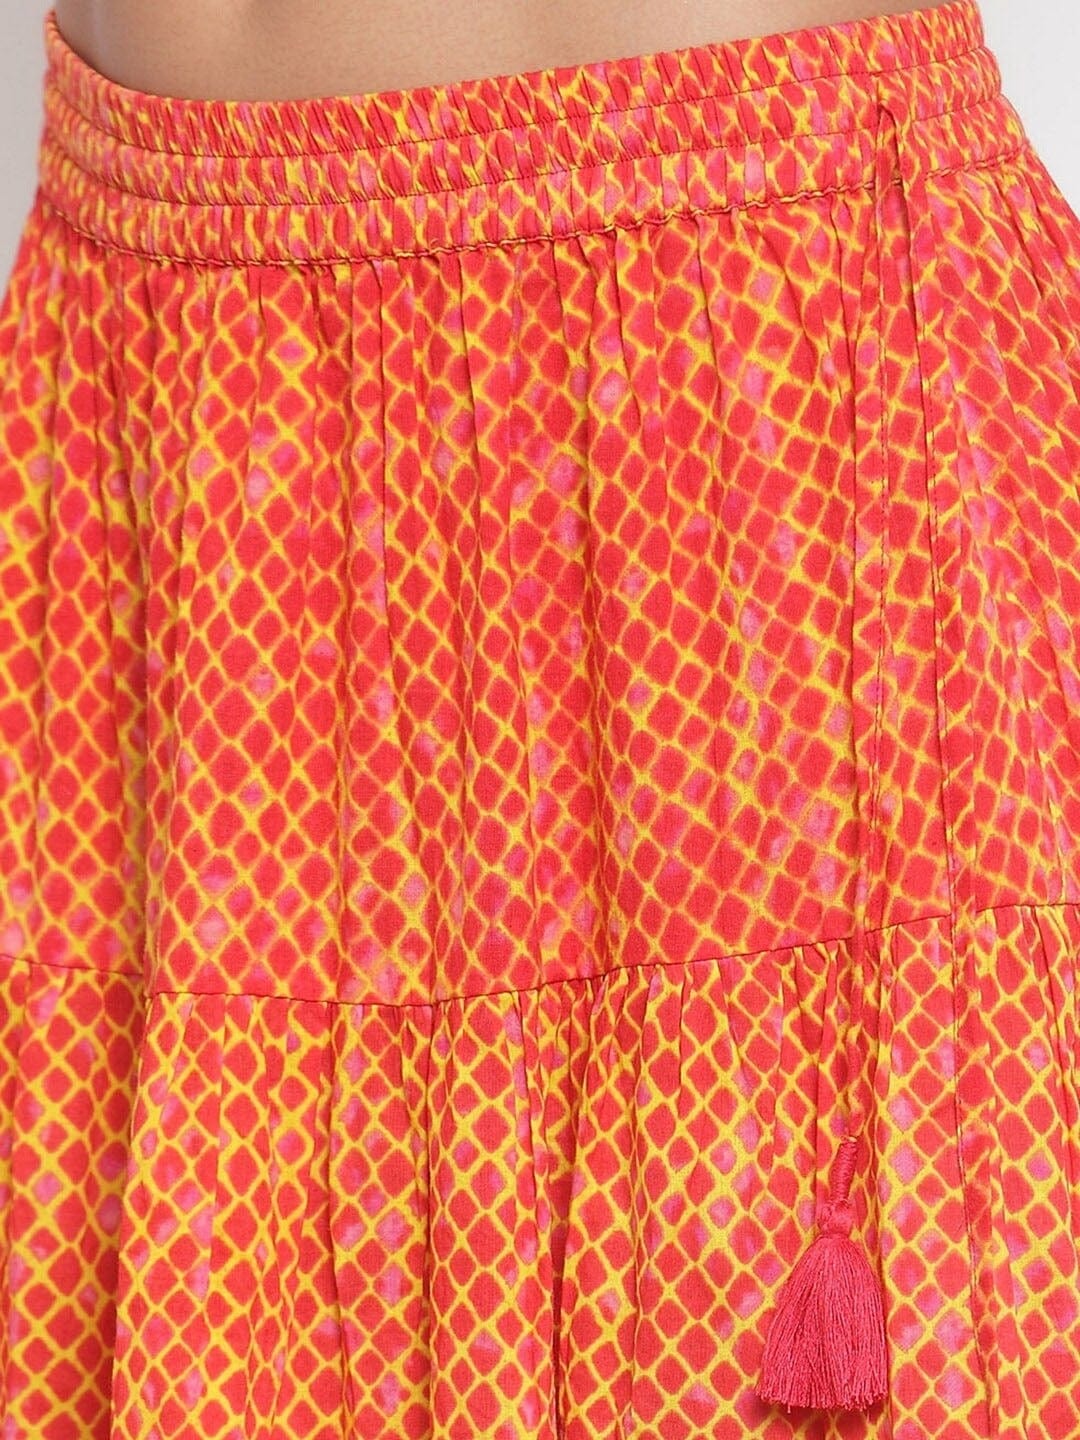 Women's KSUT Orange & Beige Printed Pure Cotton Flared Tiered Maxi Skirt - Varanga